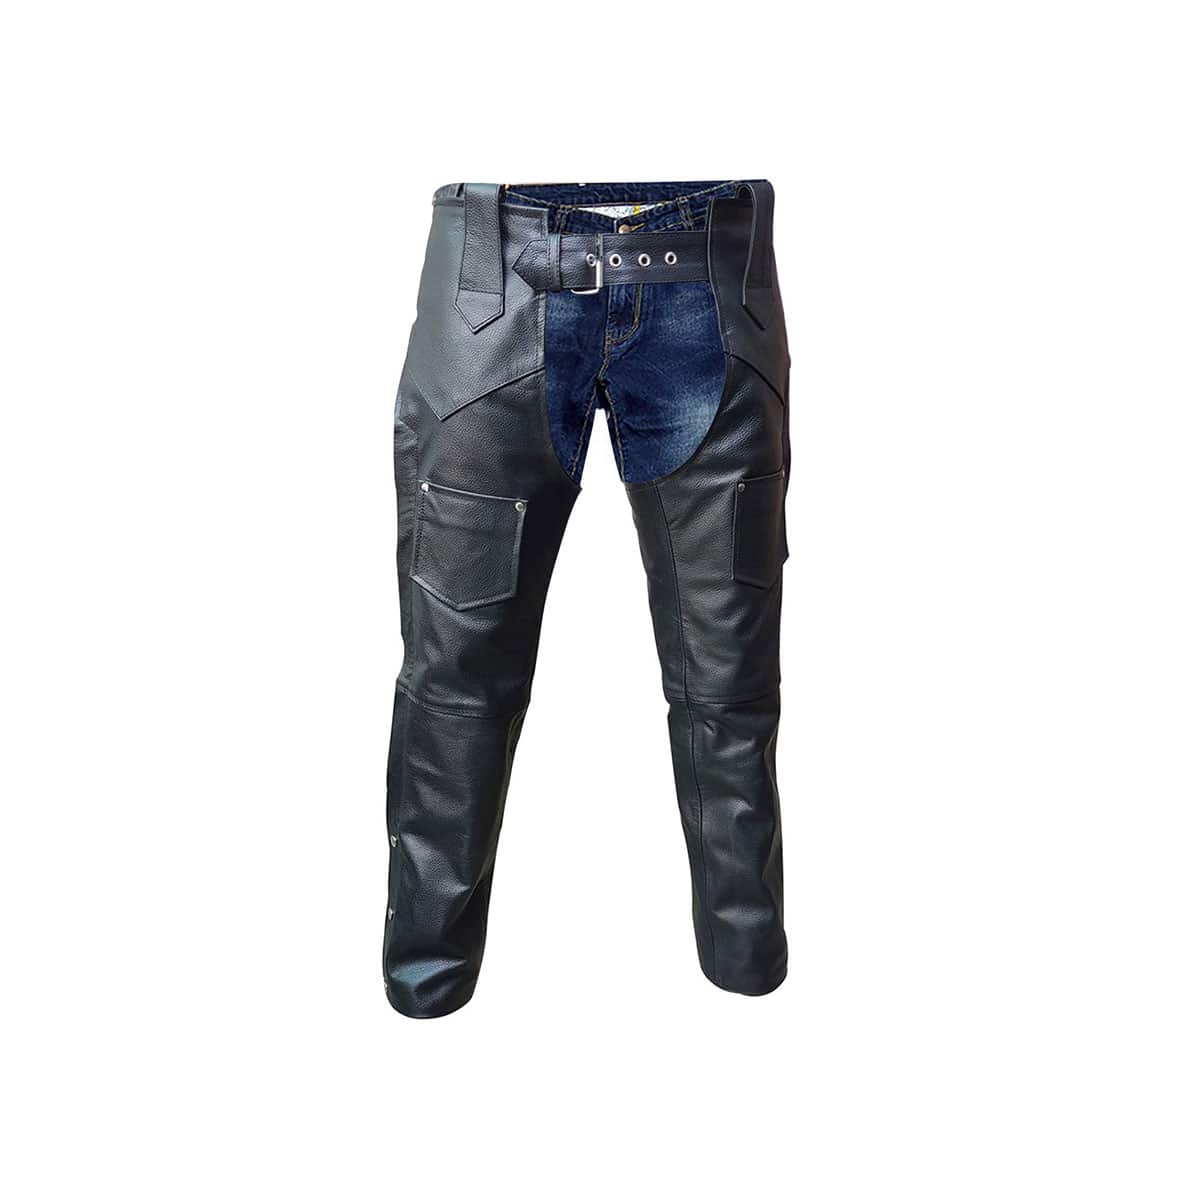 Mens Bikers Chaps Jeans Black Leather Motorcycle Trouser Pants